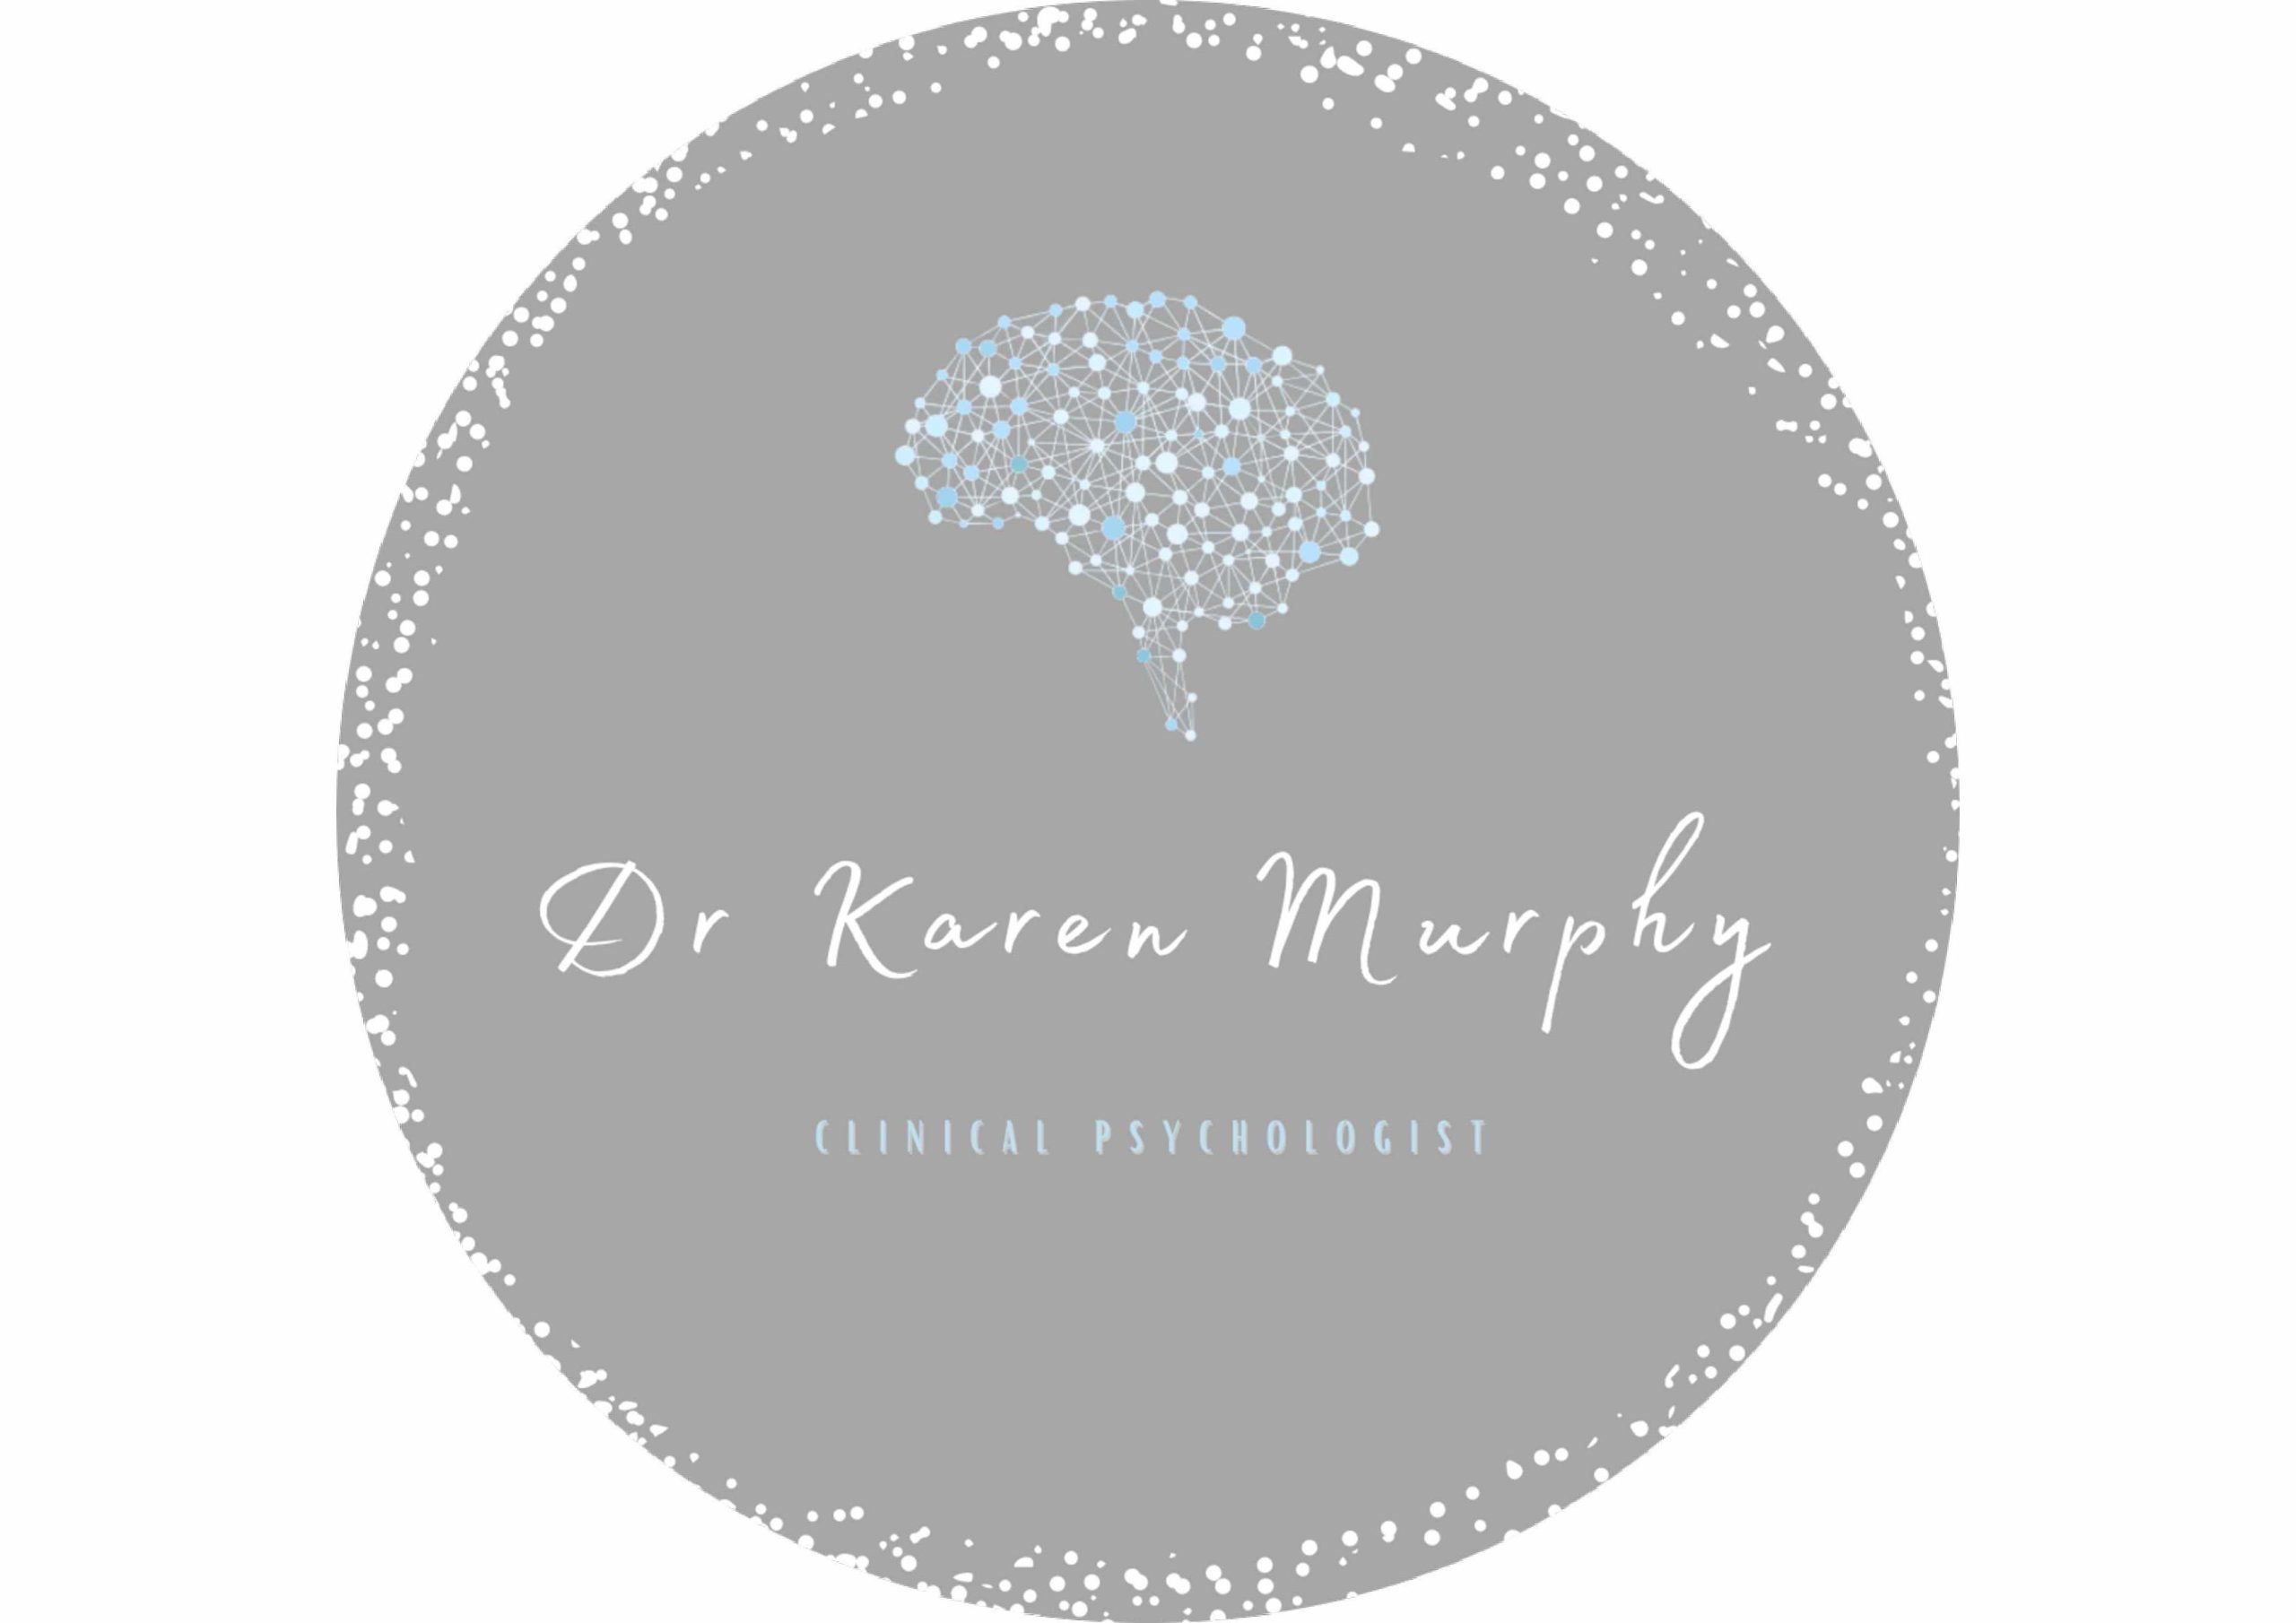 Dr Karen Murphy logo - Dr Helen Allergy Resources